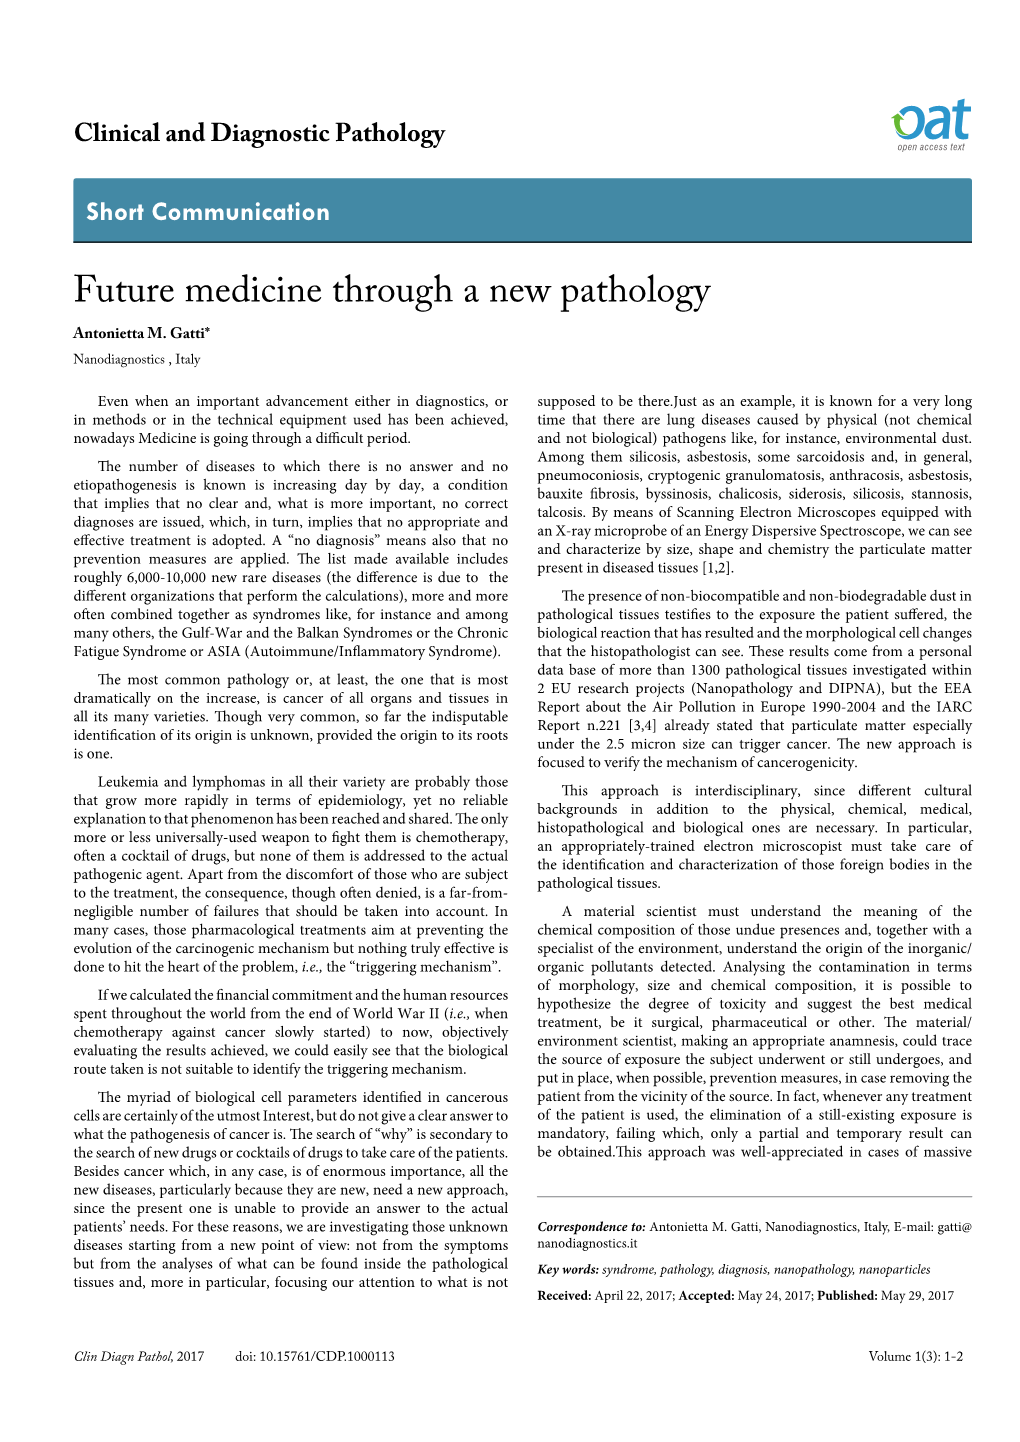 Future Medicine Through a New Pathology Antonietta M